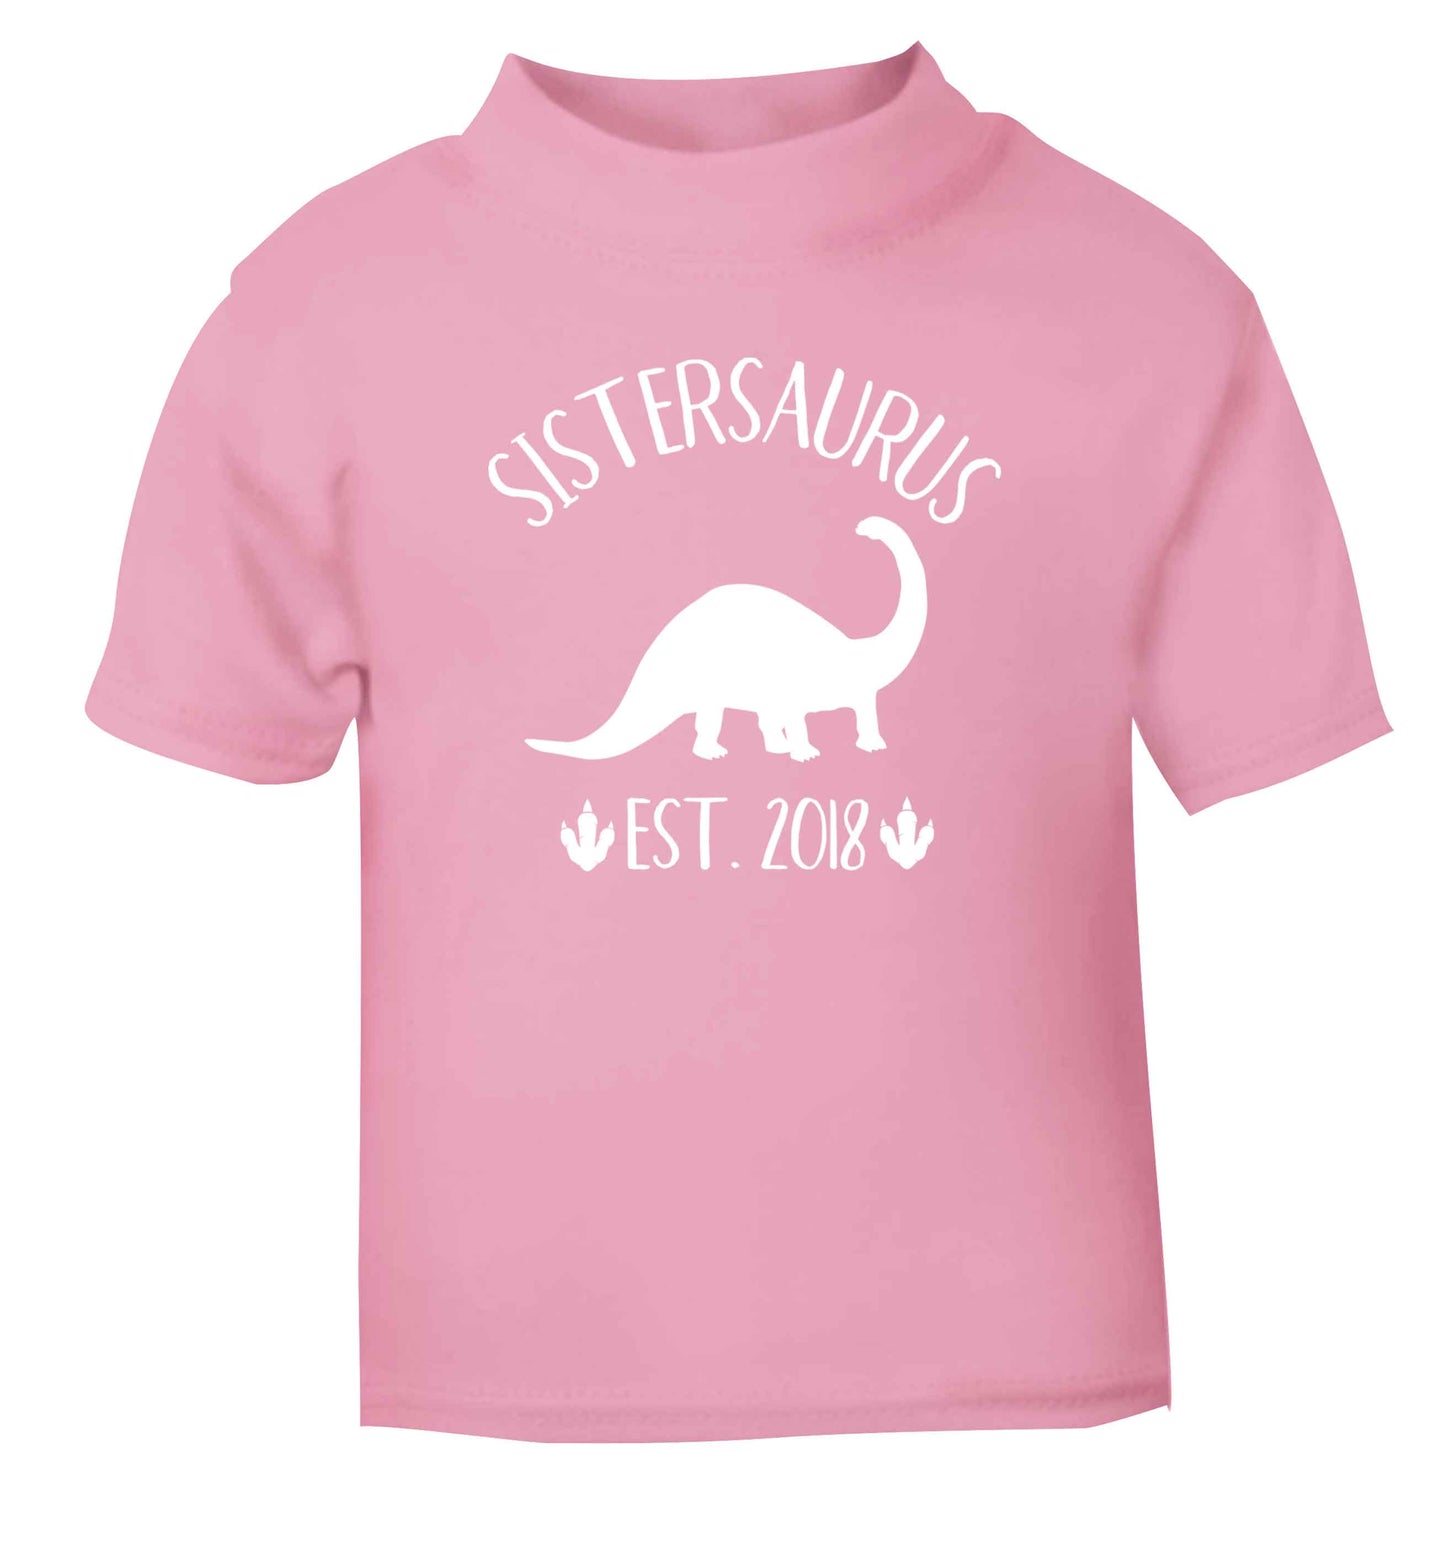 Personalised sistersaurus since (custom date) light pink Baby Toddler Tshirt 2 Years